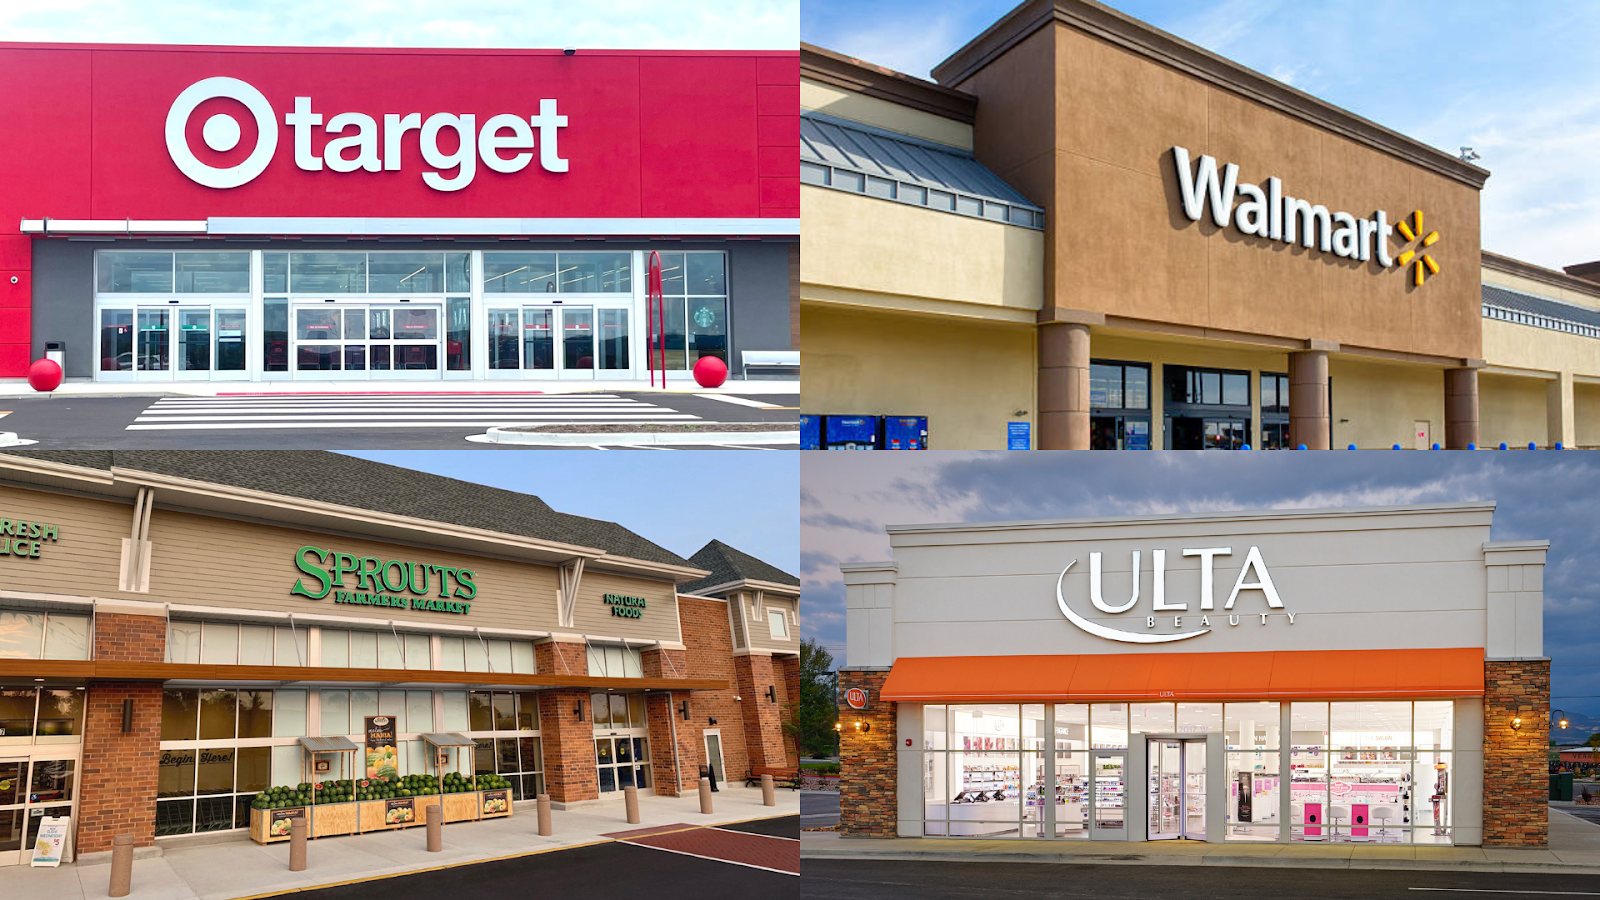 4 large big box retailers: Target, Walmart, Sprouts, Ulta